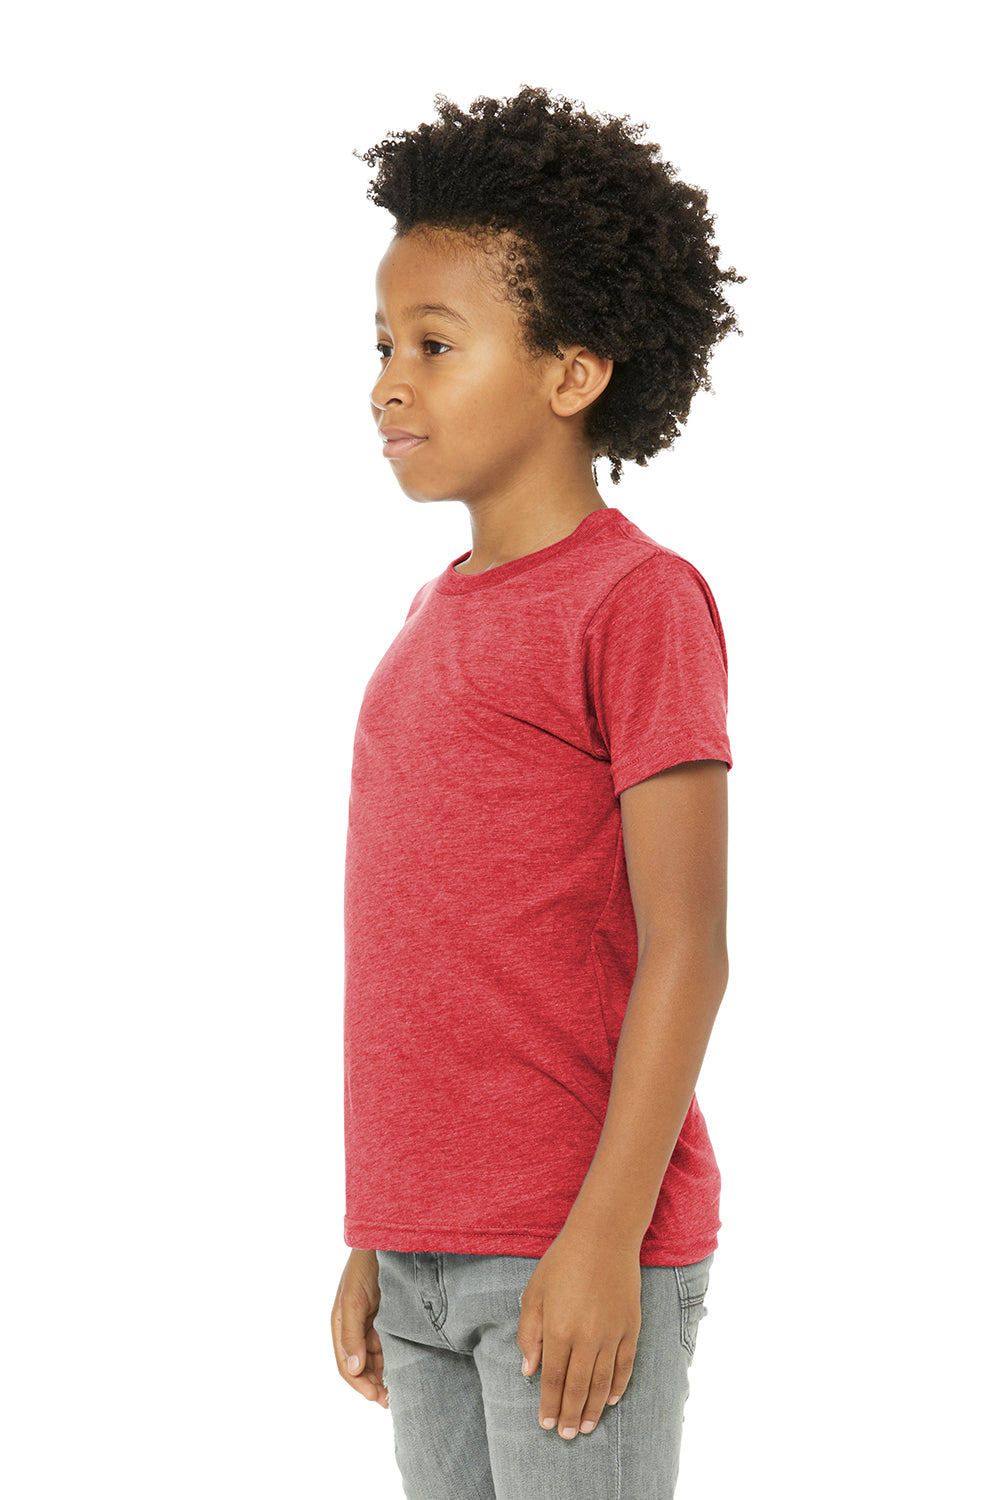 Bella + Canvas 3413Y Youth Short Sleeve Crewneck T-Shirt Red Model 3Q